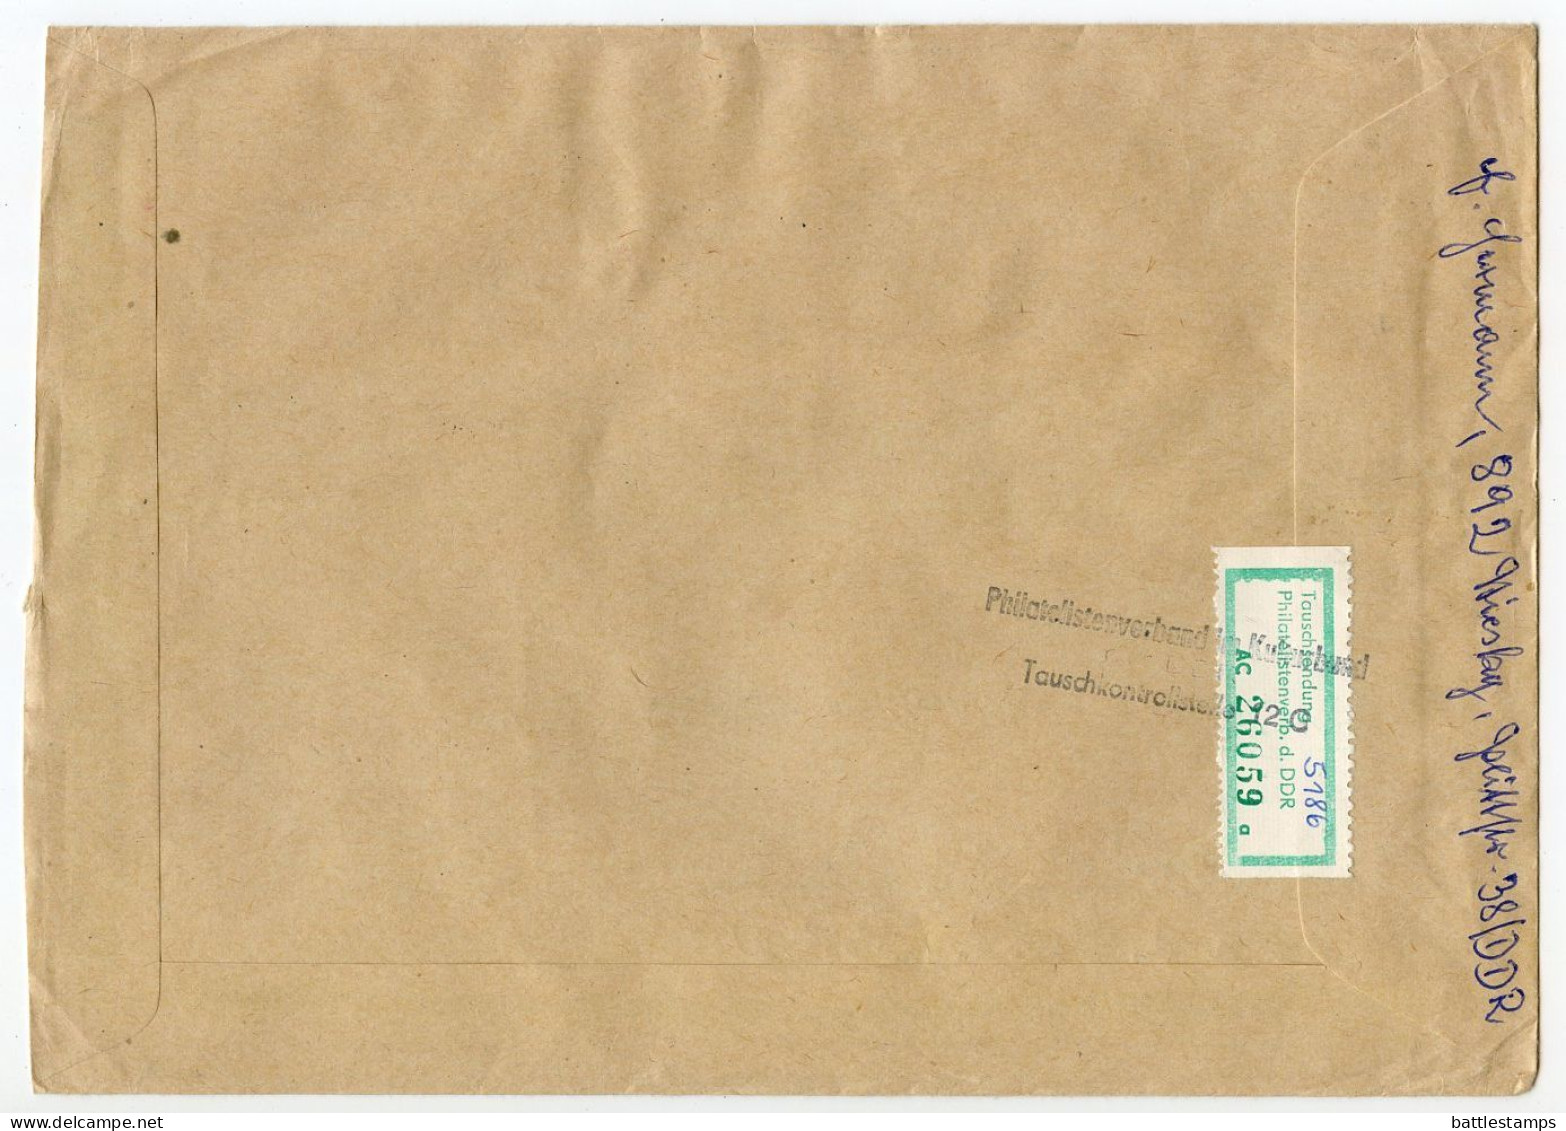 Germany East 1979 Registered Cover; Görlitz To Vienenburg; Circus & Other Stamps; Tauschsendung (Exchange Control) Label - Briefe U. Dokumente